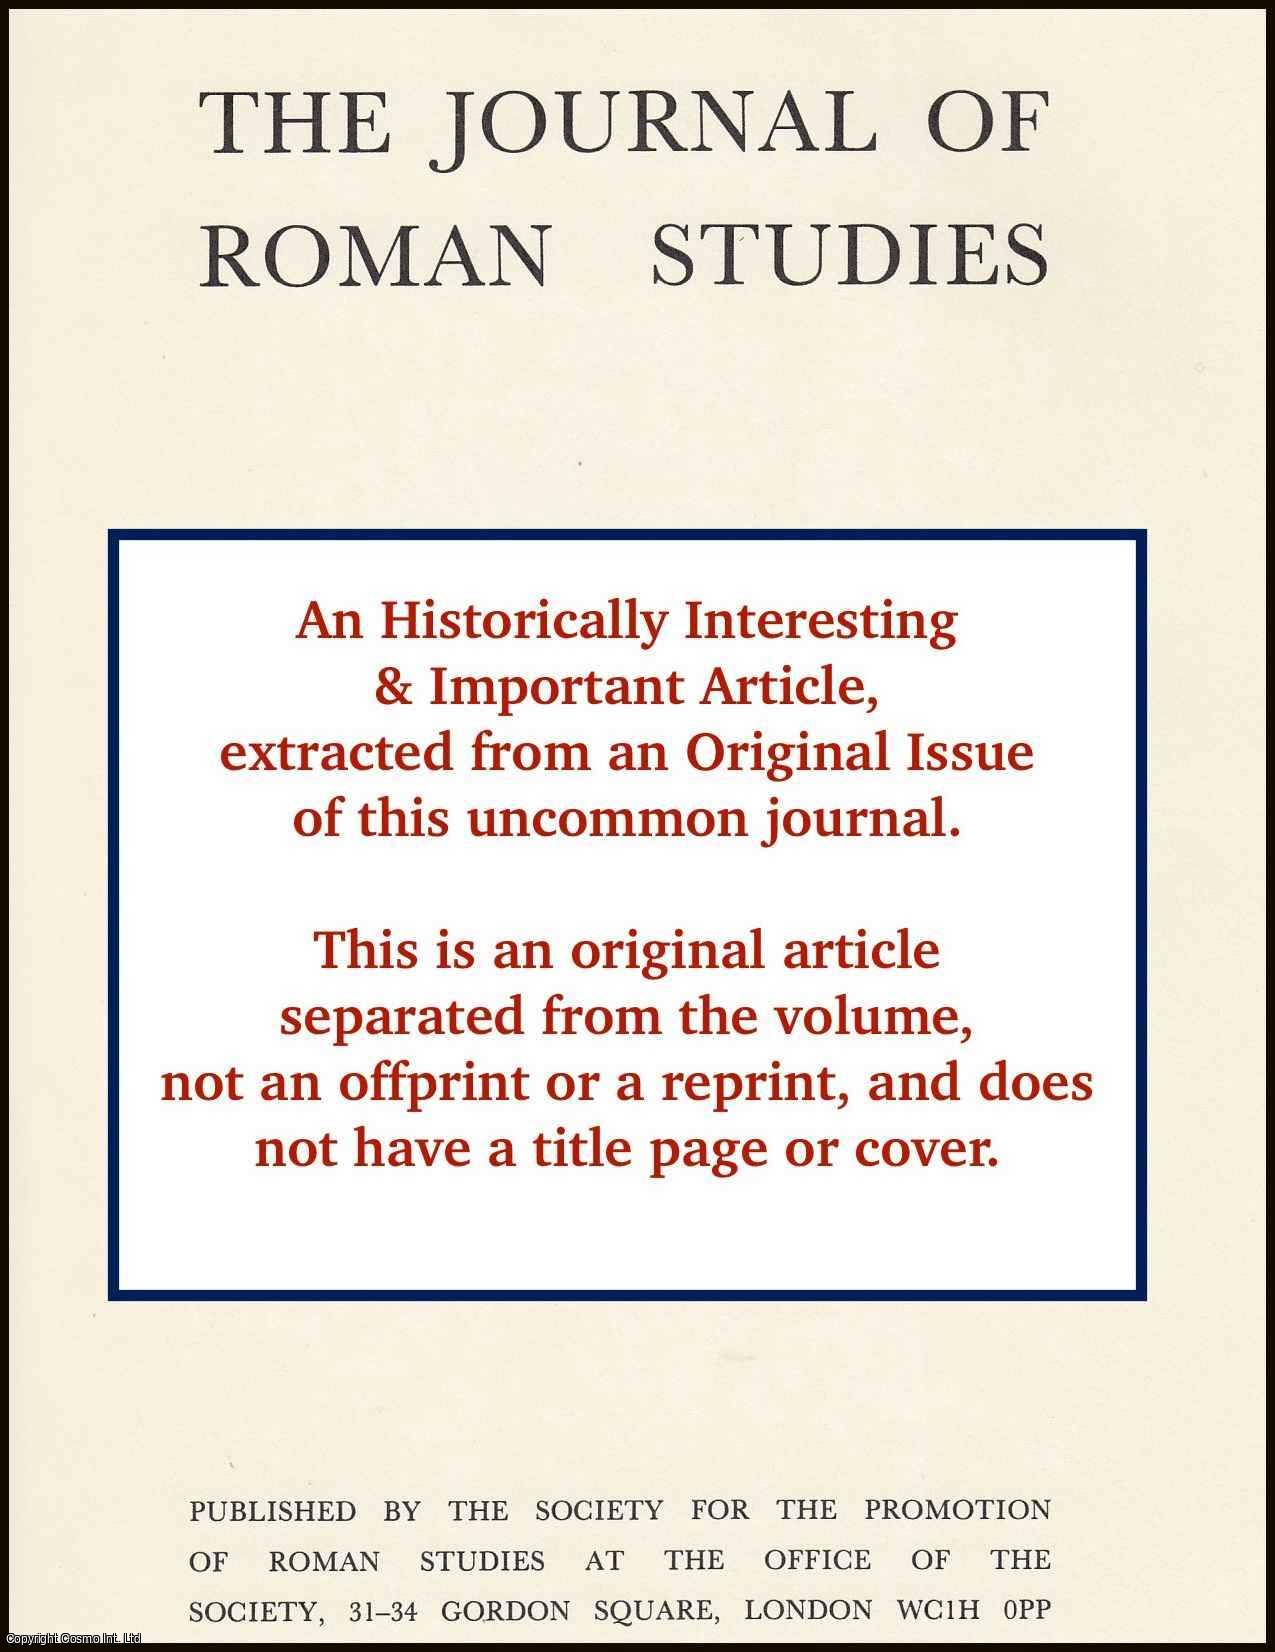 J.P.V.D. Balsdon - Roman History, 65-50 B.C.: Five Problems. An original article from the Journal of Roman Studies, 1962.